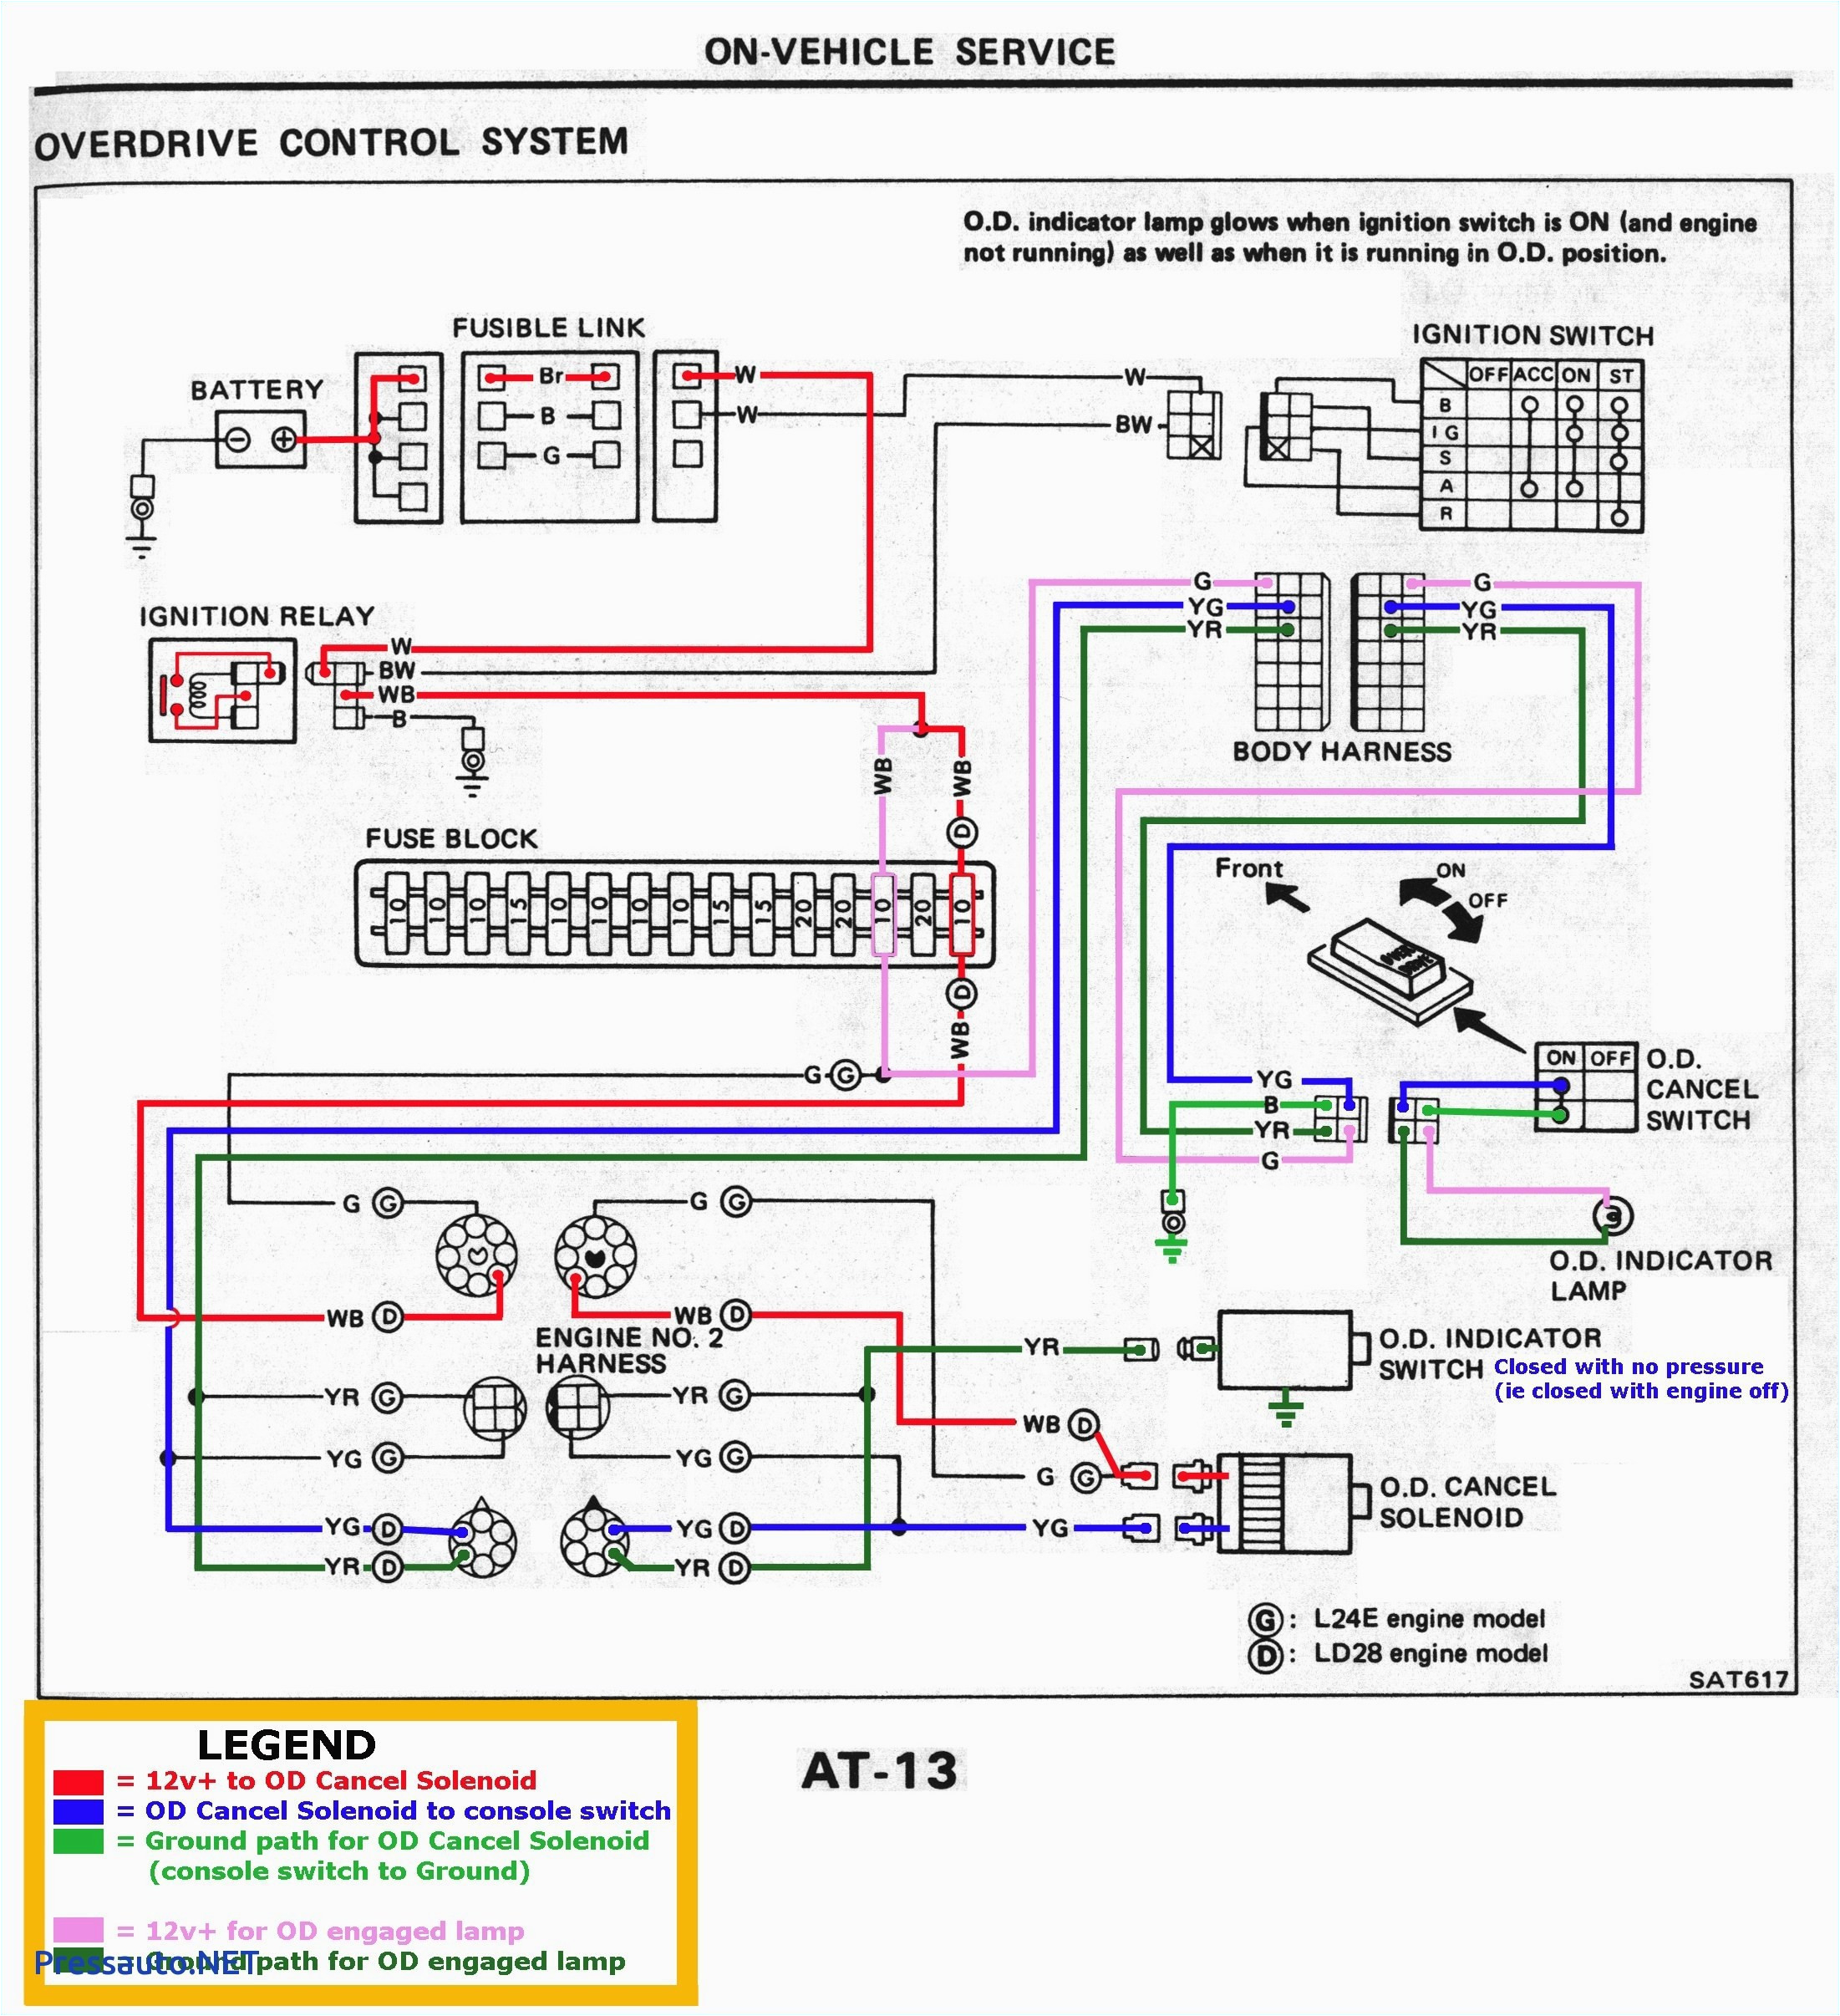 10 50r wiring diagram u2013 electrical wiring diagram software mix 10 50r wiring diagram